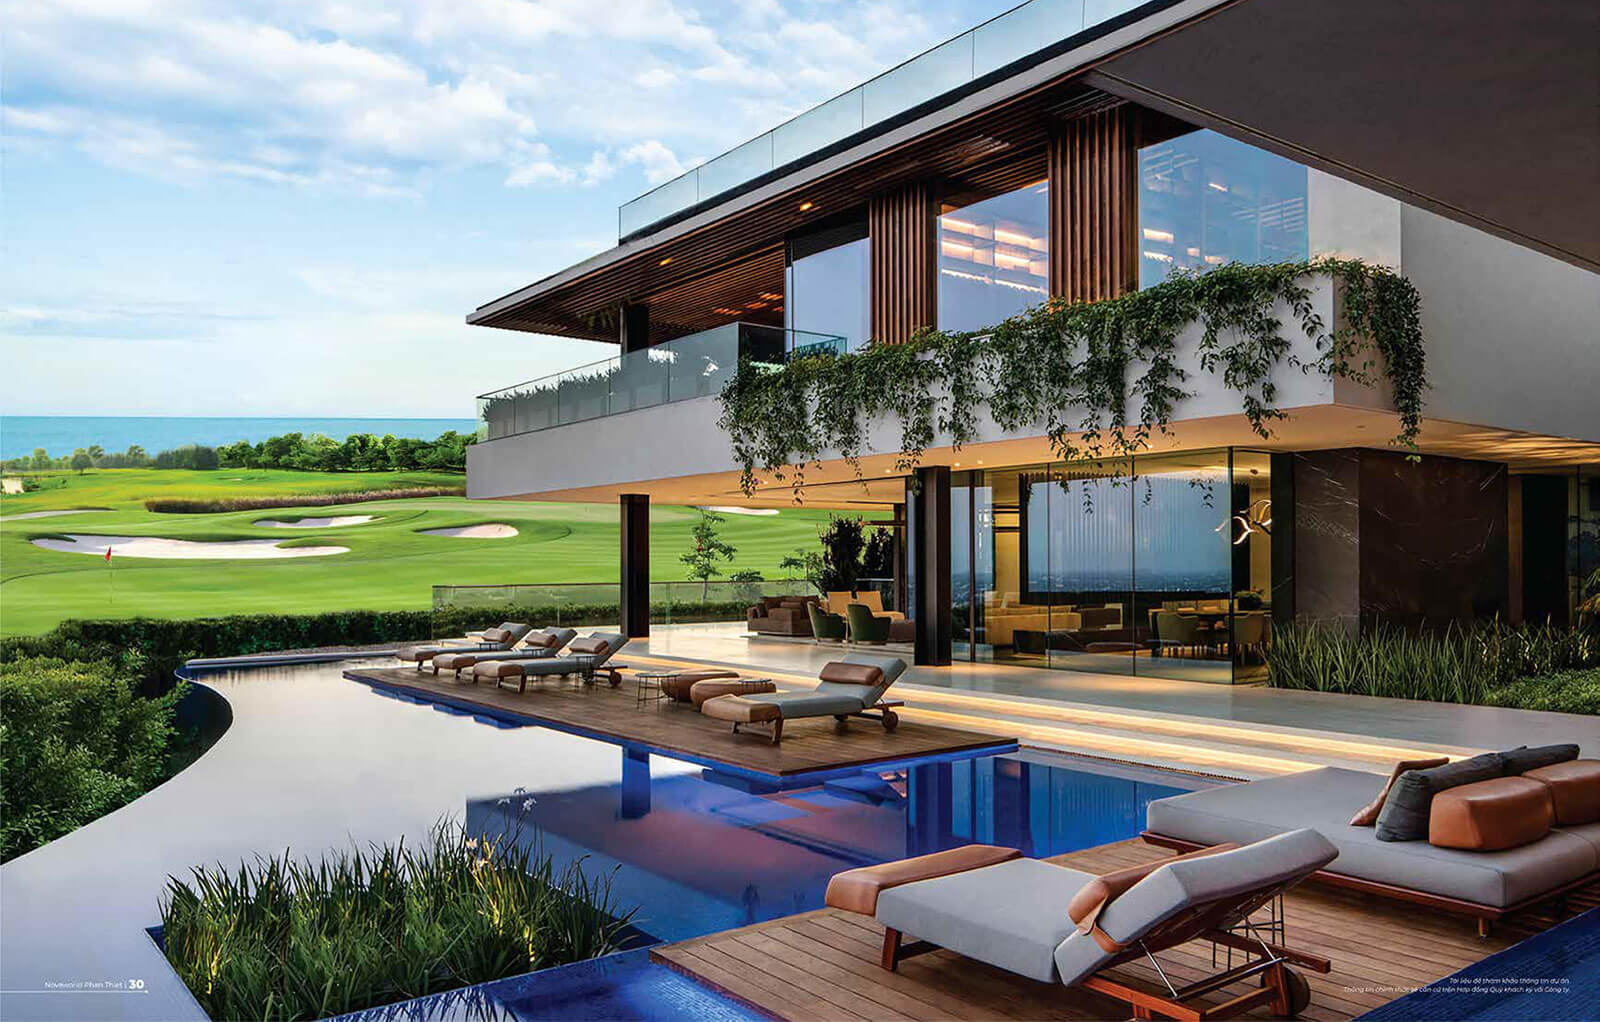 PGA Golf Villas Novaworld Phan Thiết